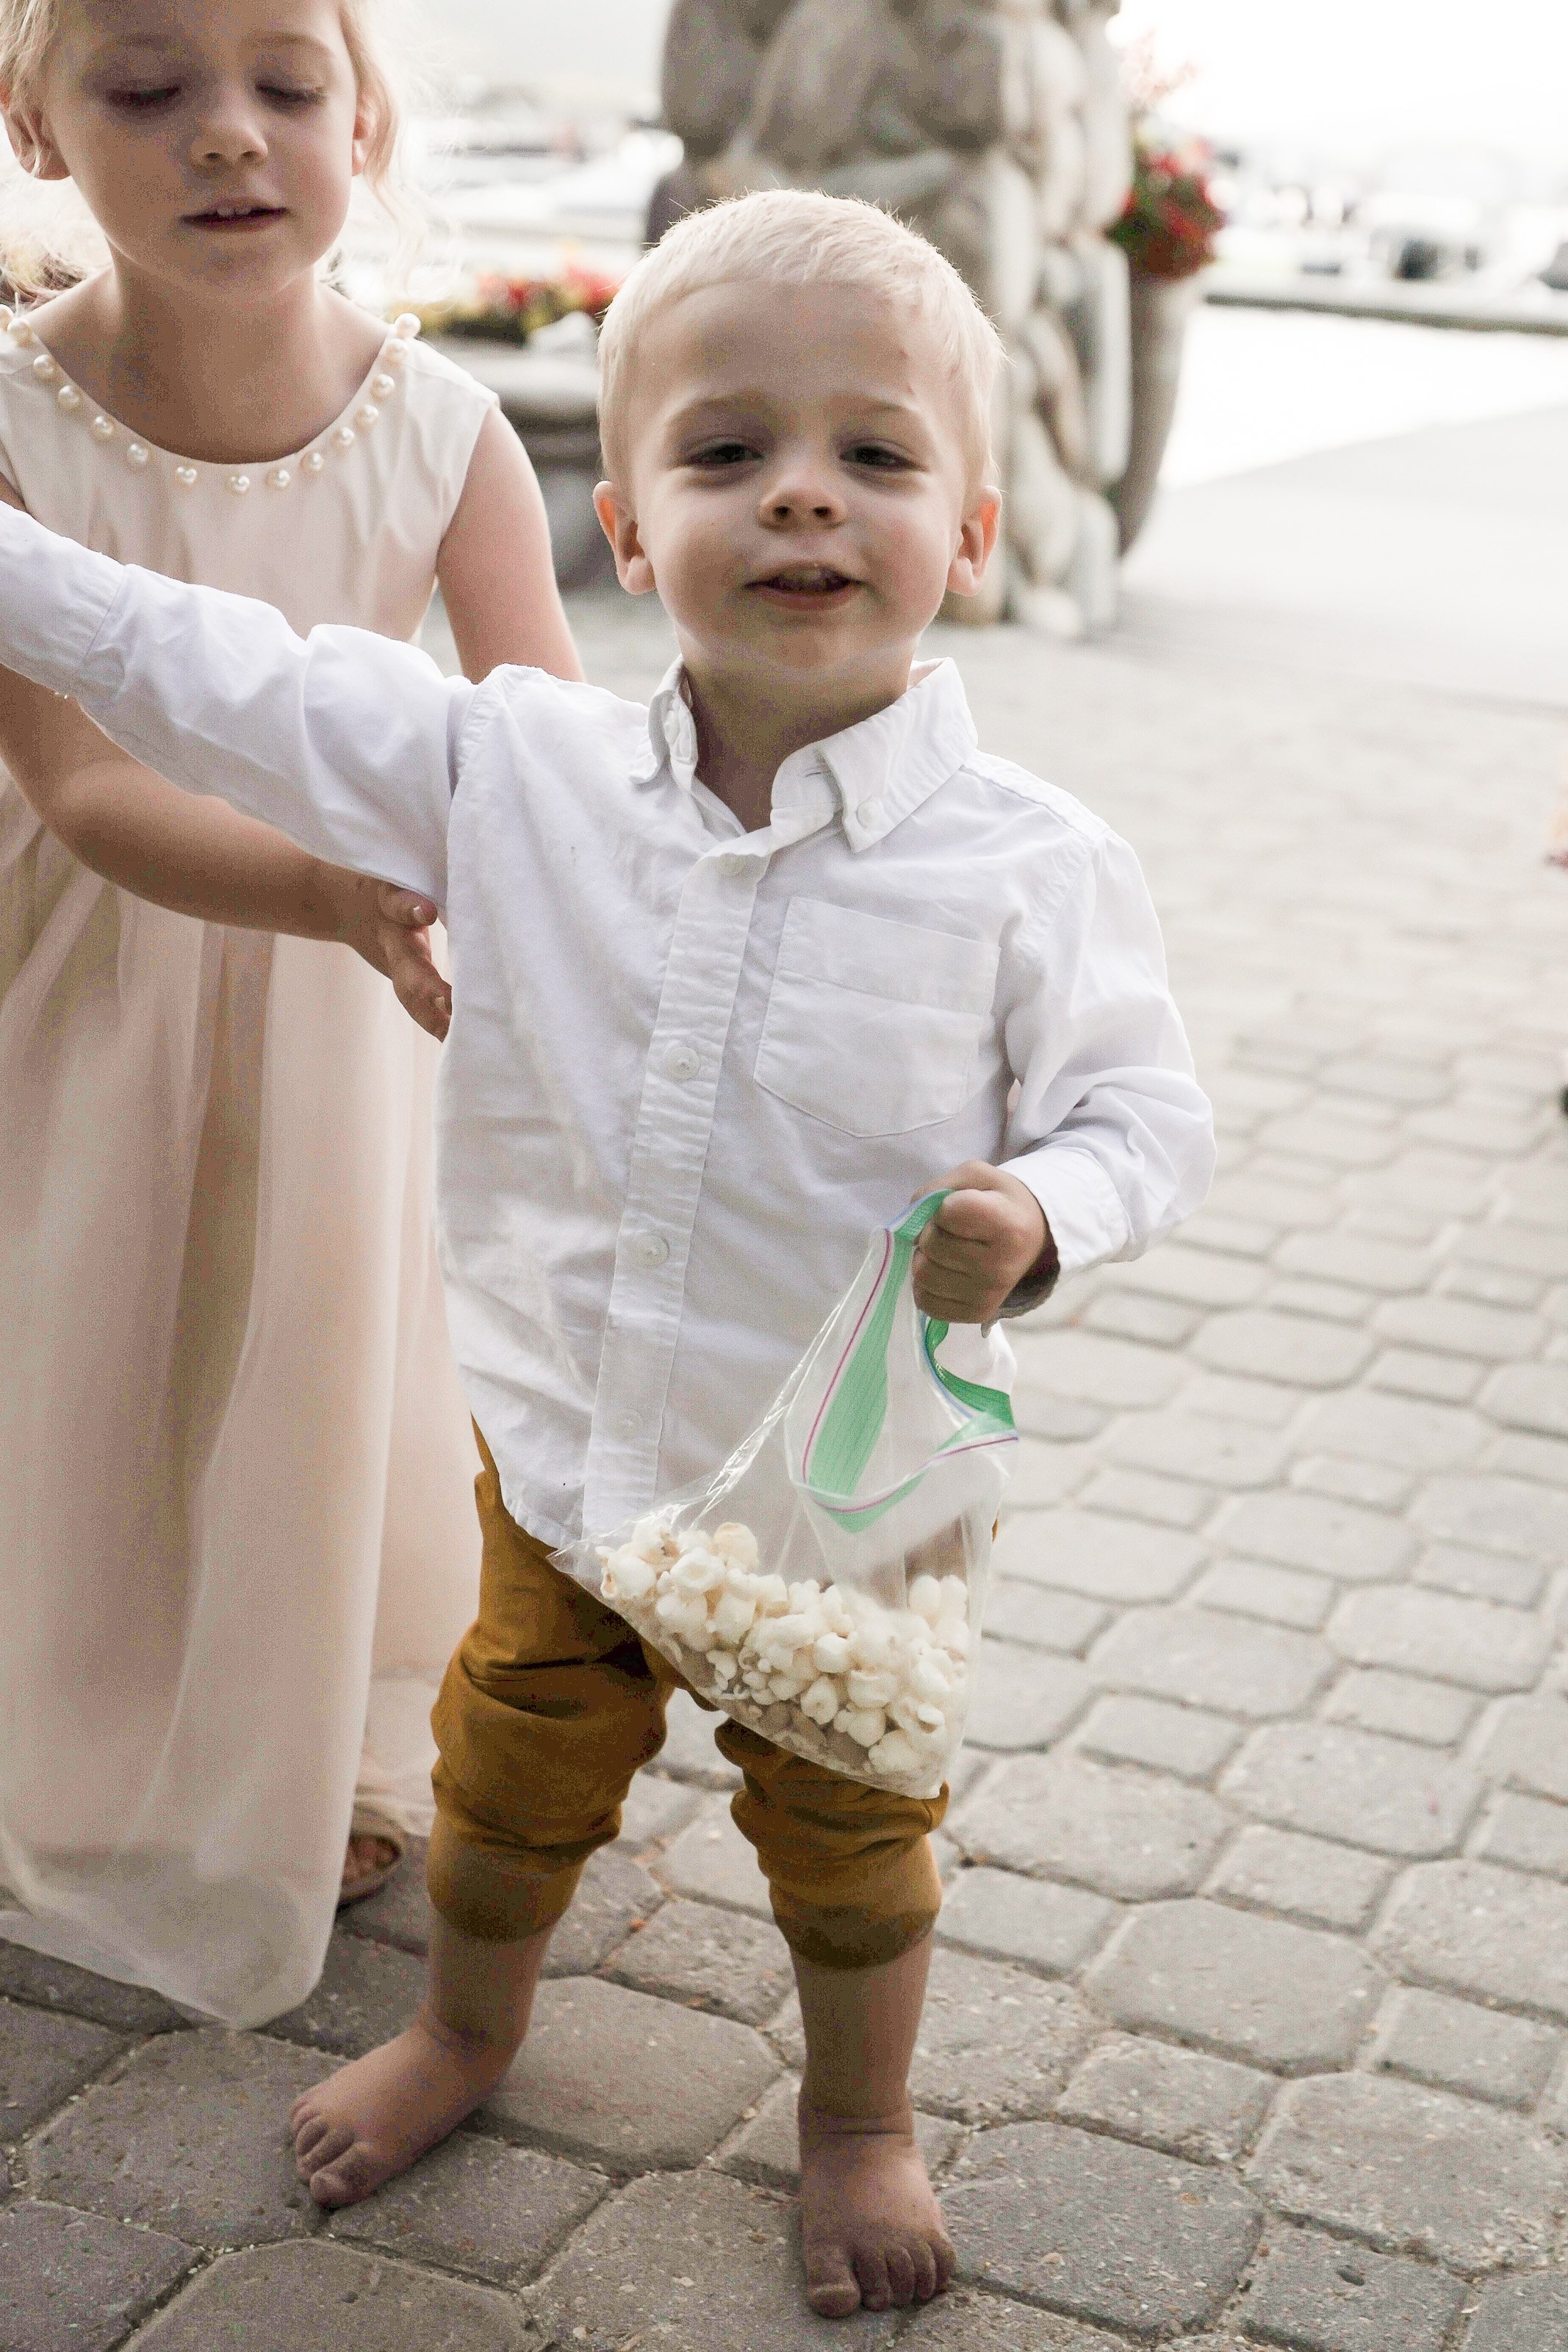 Boy with popcorn